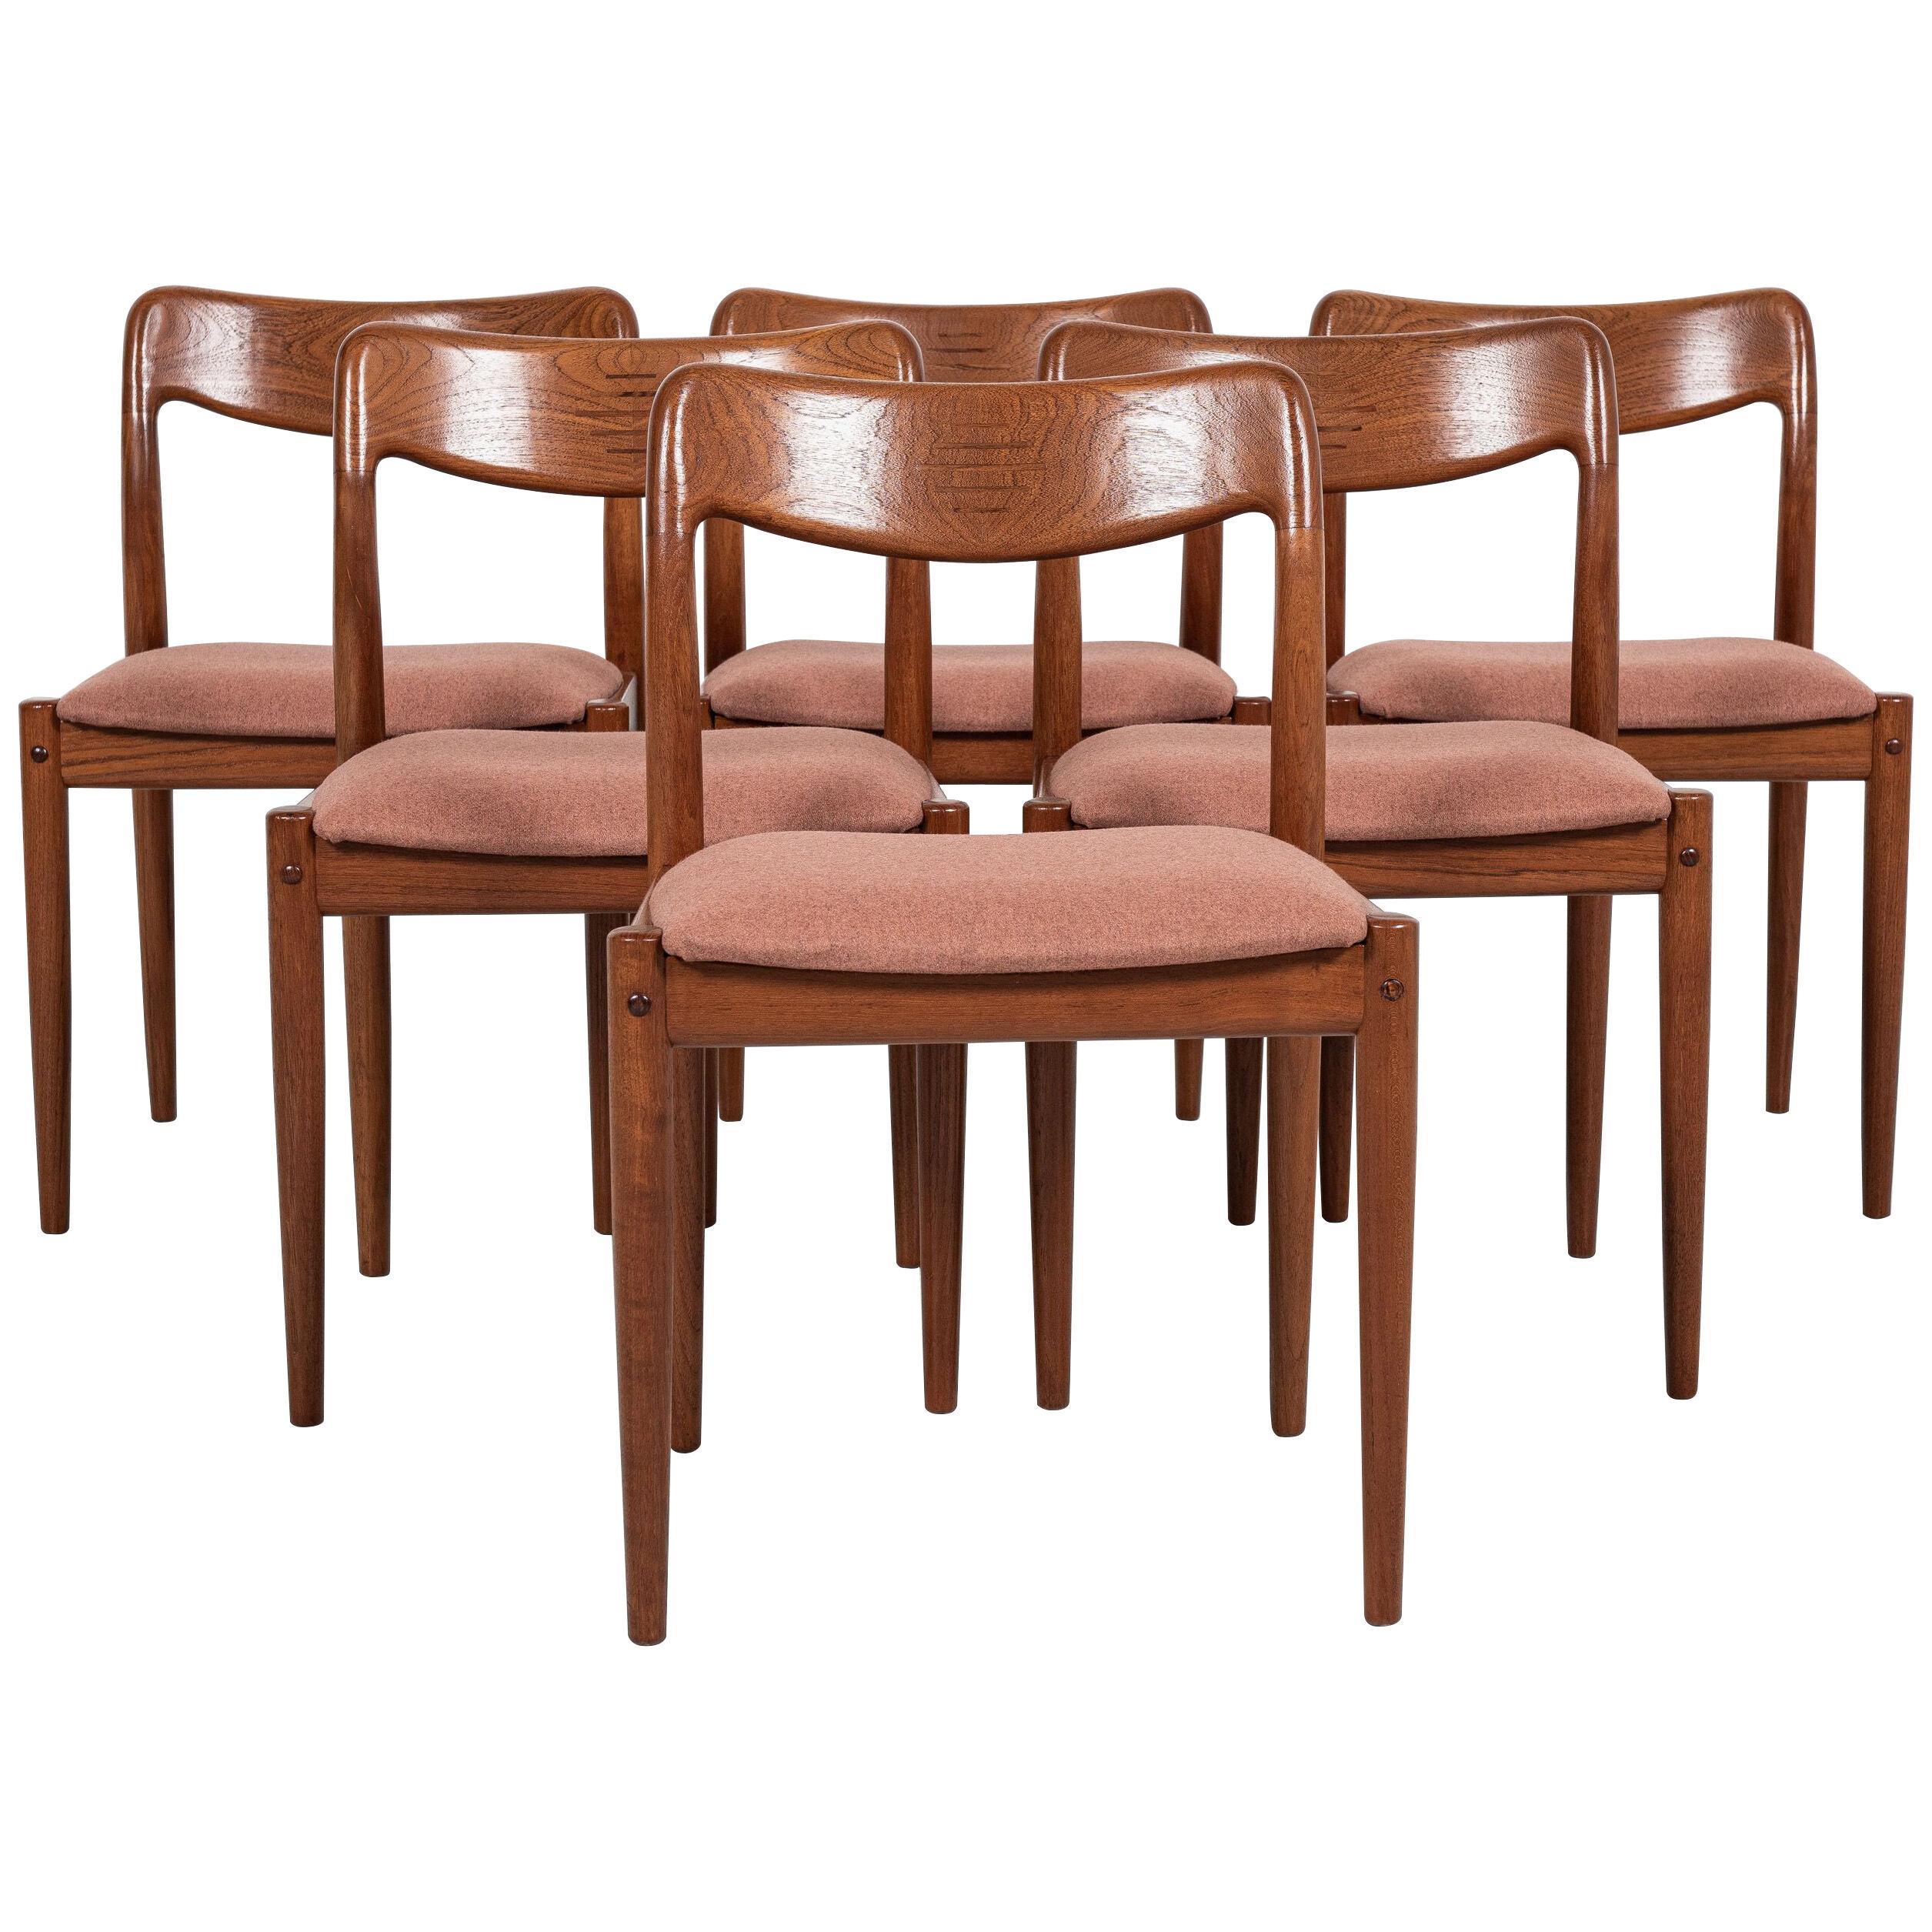 Midcentury Danish set of 6 dining chairs in teak by Johannes Andersen for Uldum